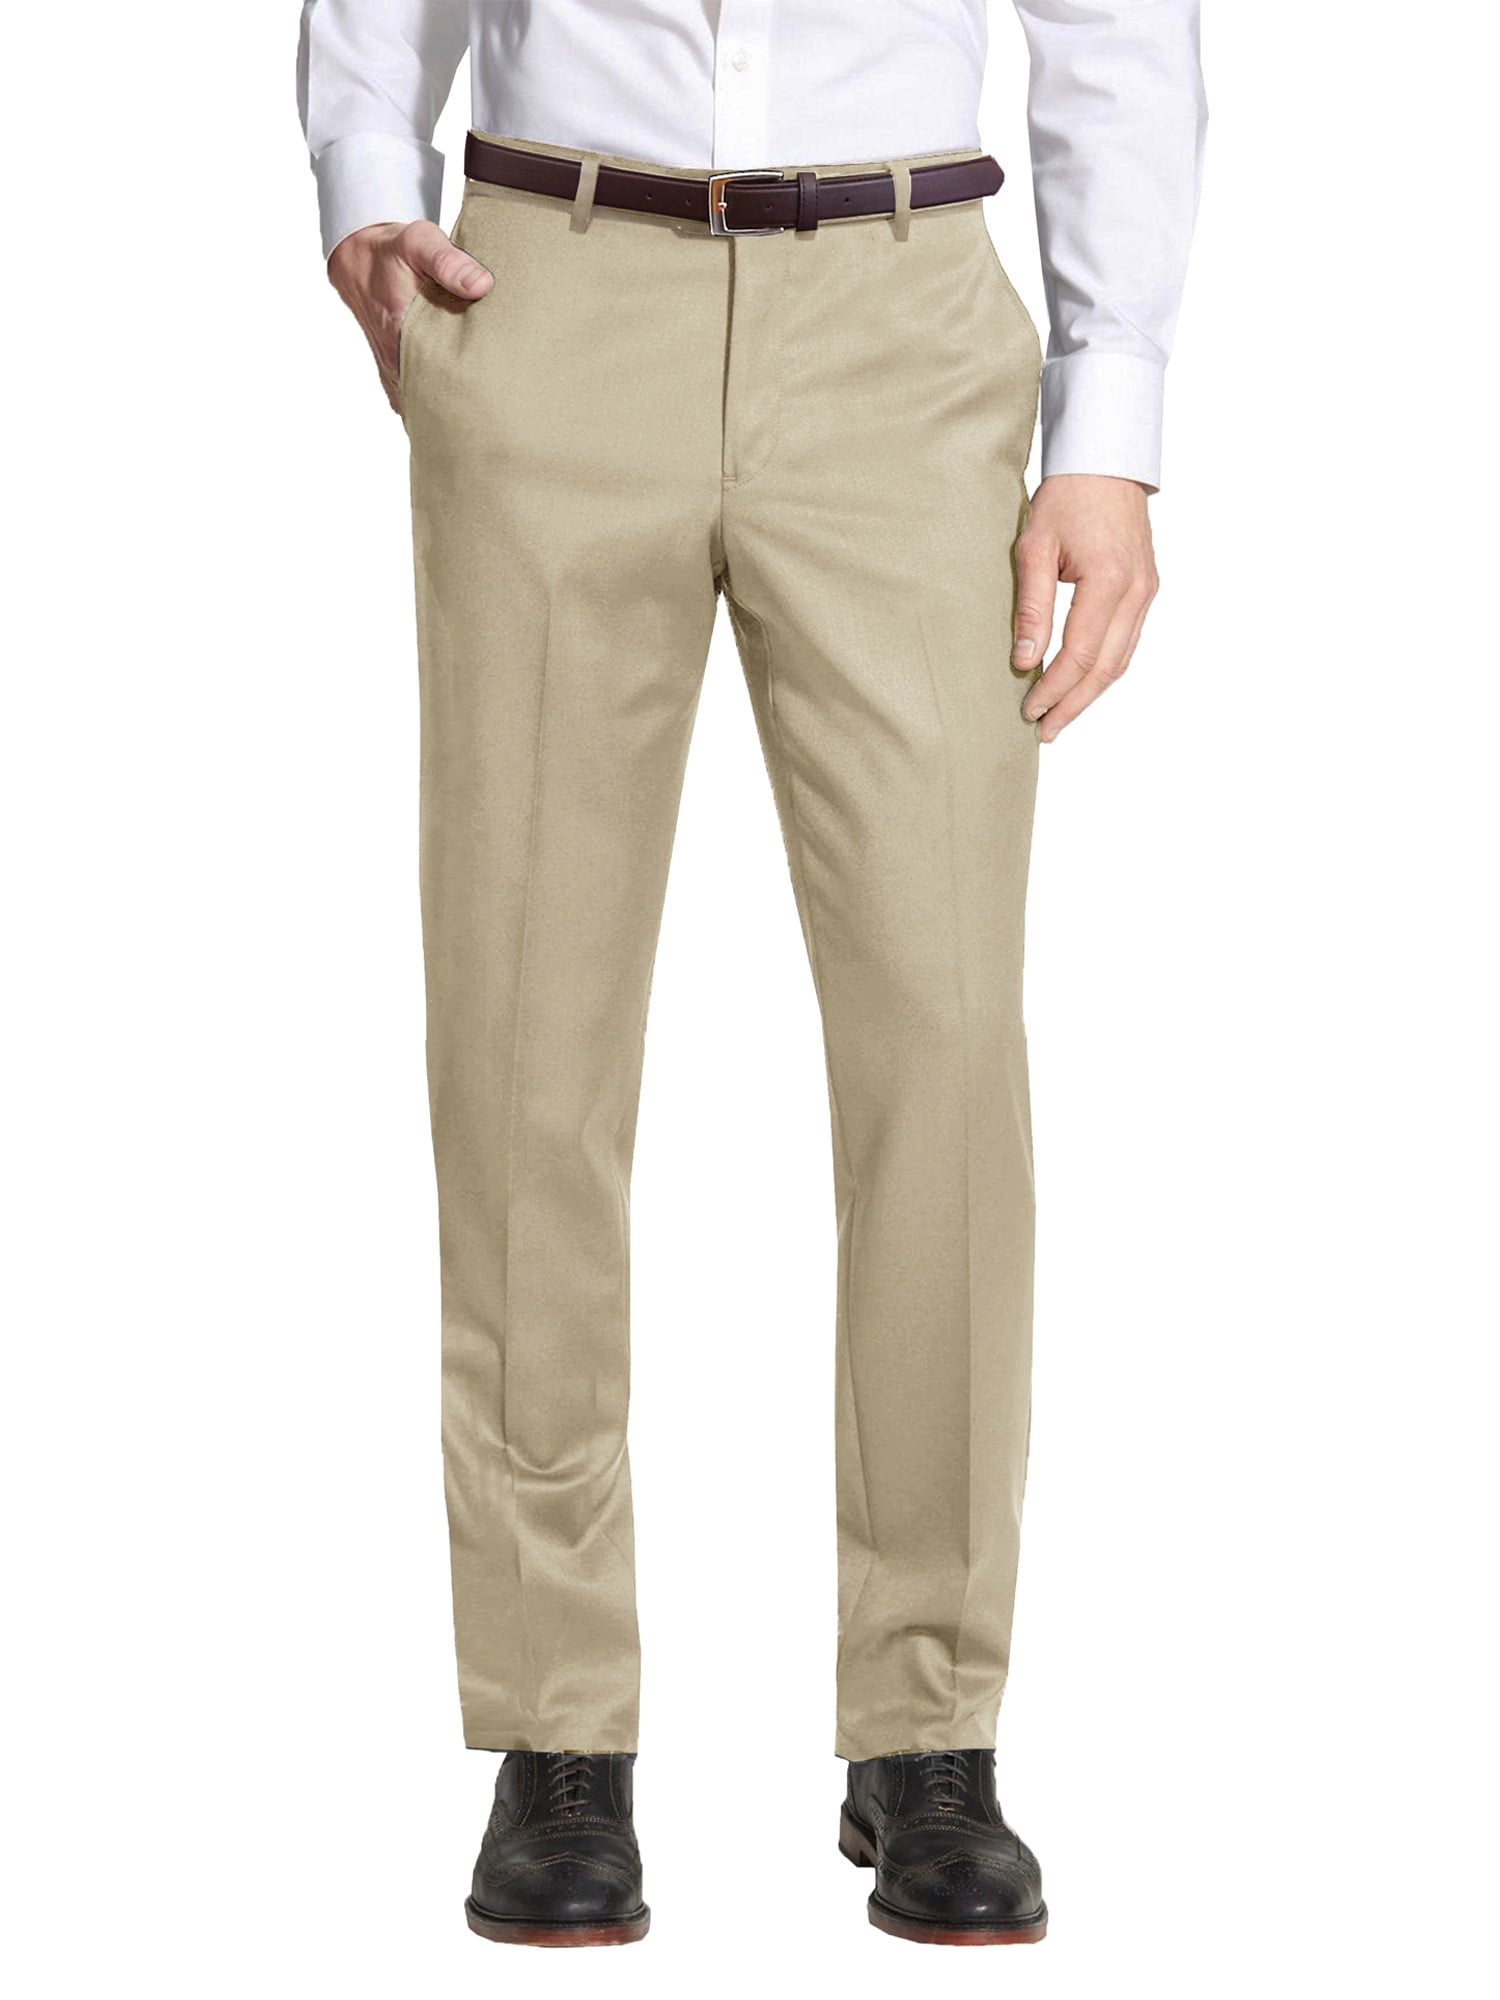 Men's Slim-Fit Belted Casual Dress Pants 